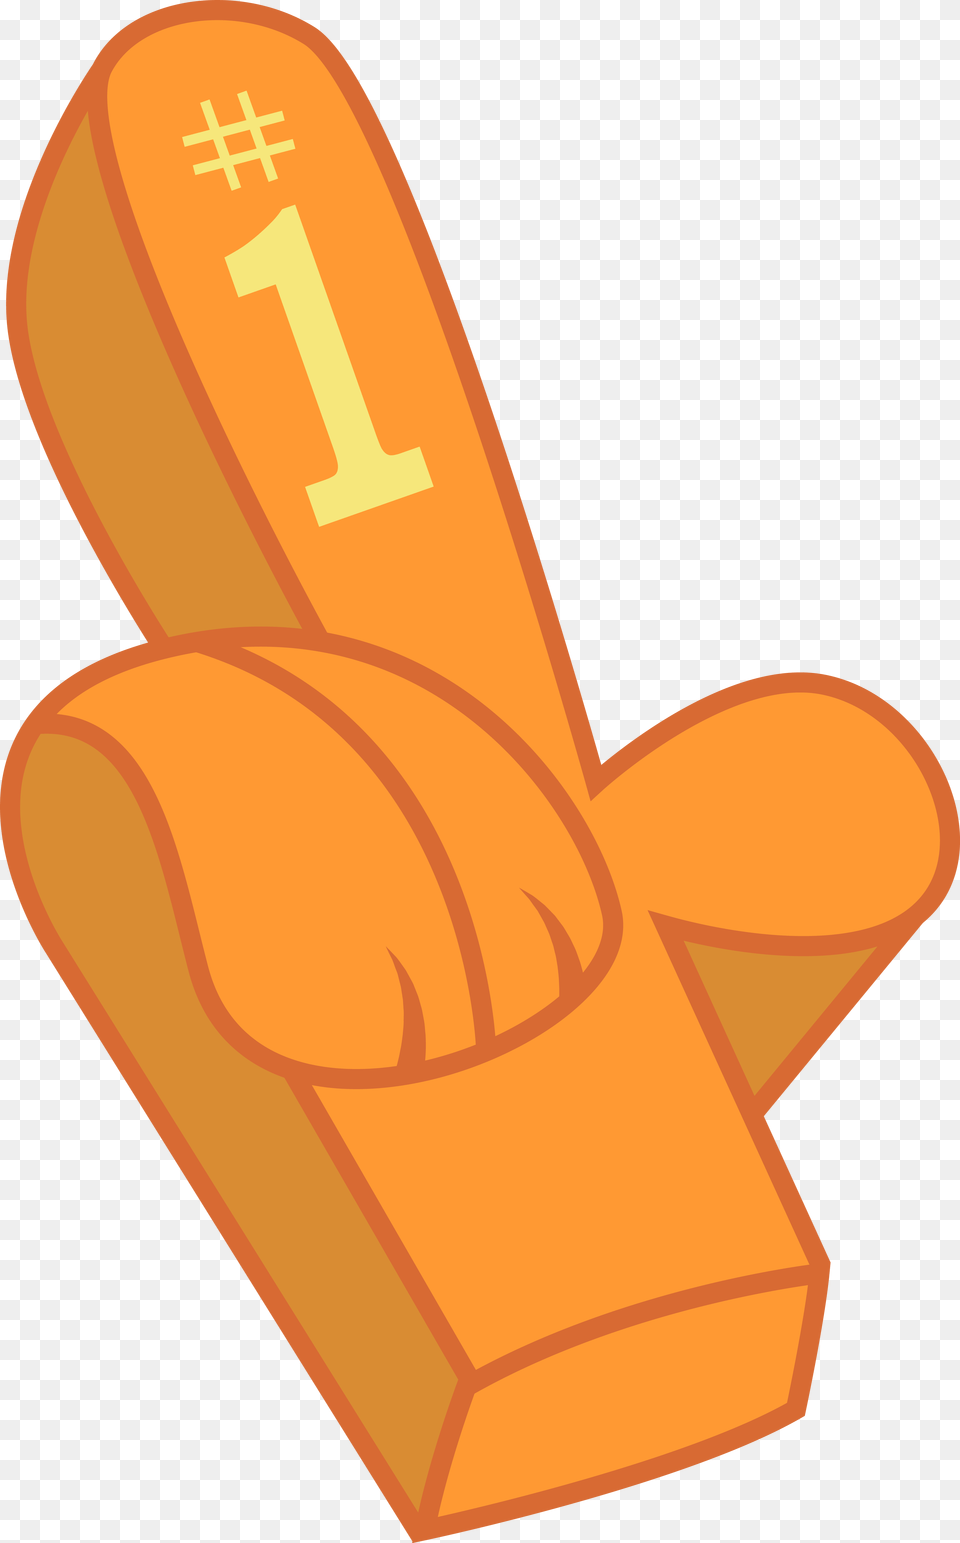 Go Team Foam Finger Clip Art, Cross, Symbol, Cutlery Free Png Download